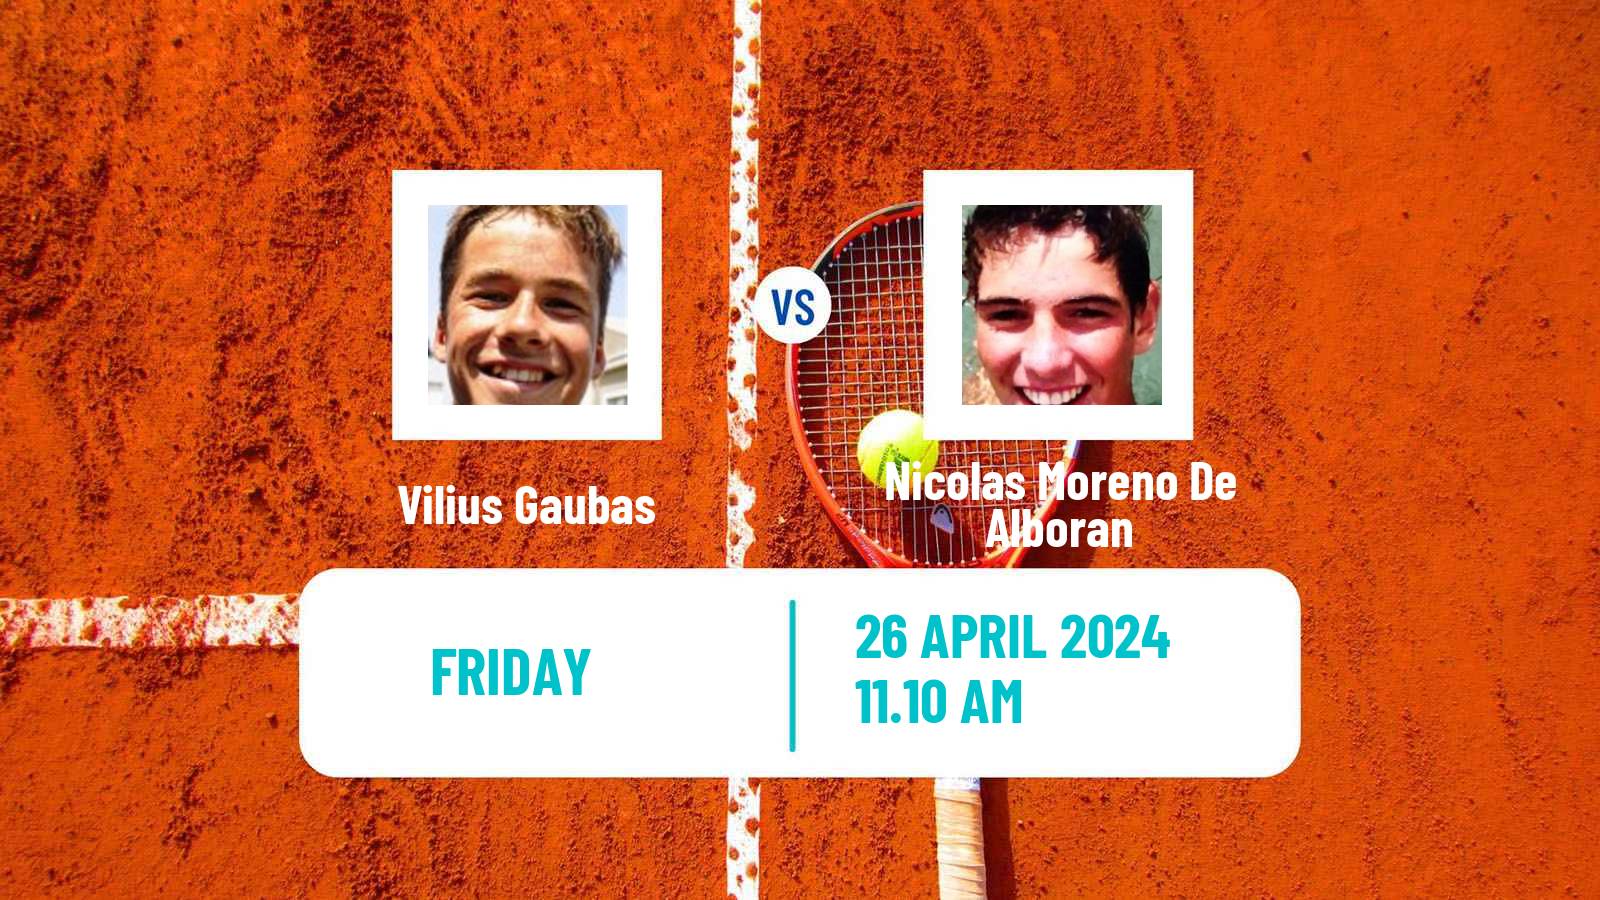 Tennis Rome Challenger Men Vilius Gaubas - Nicolas Moreno De Alboran